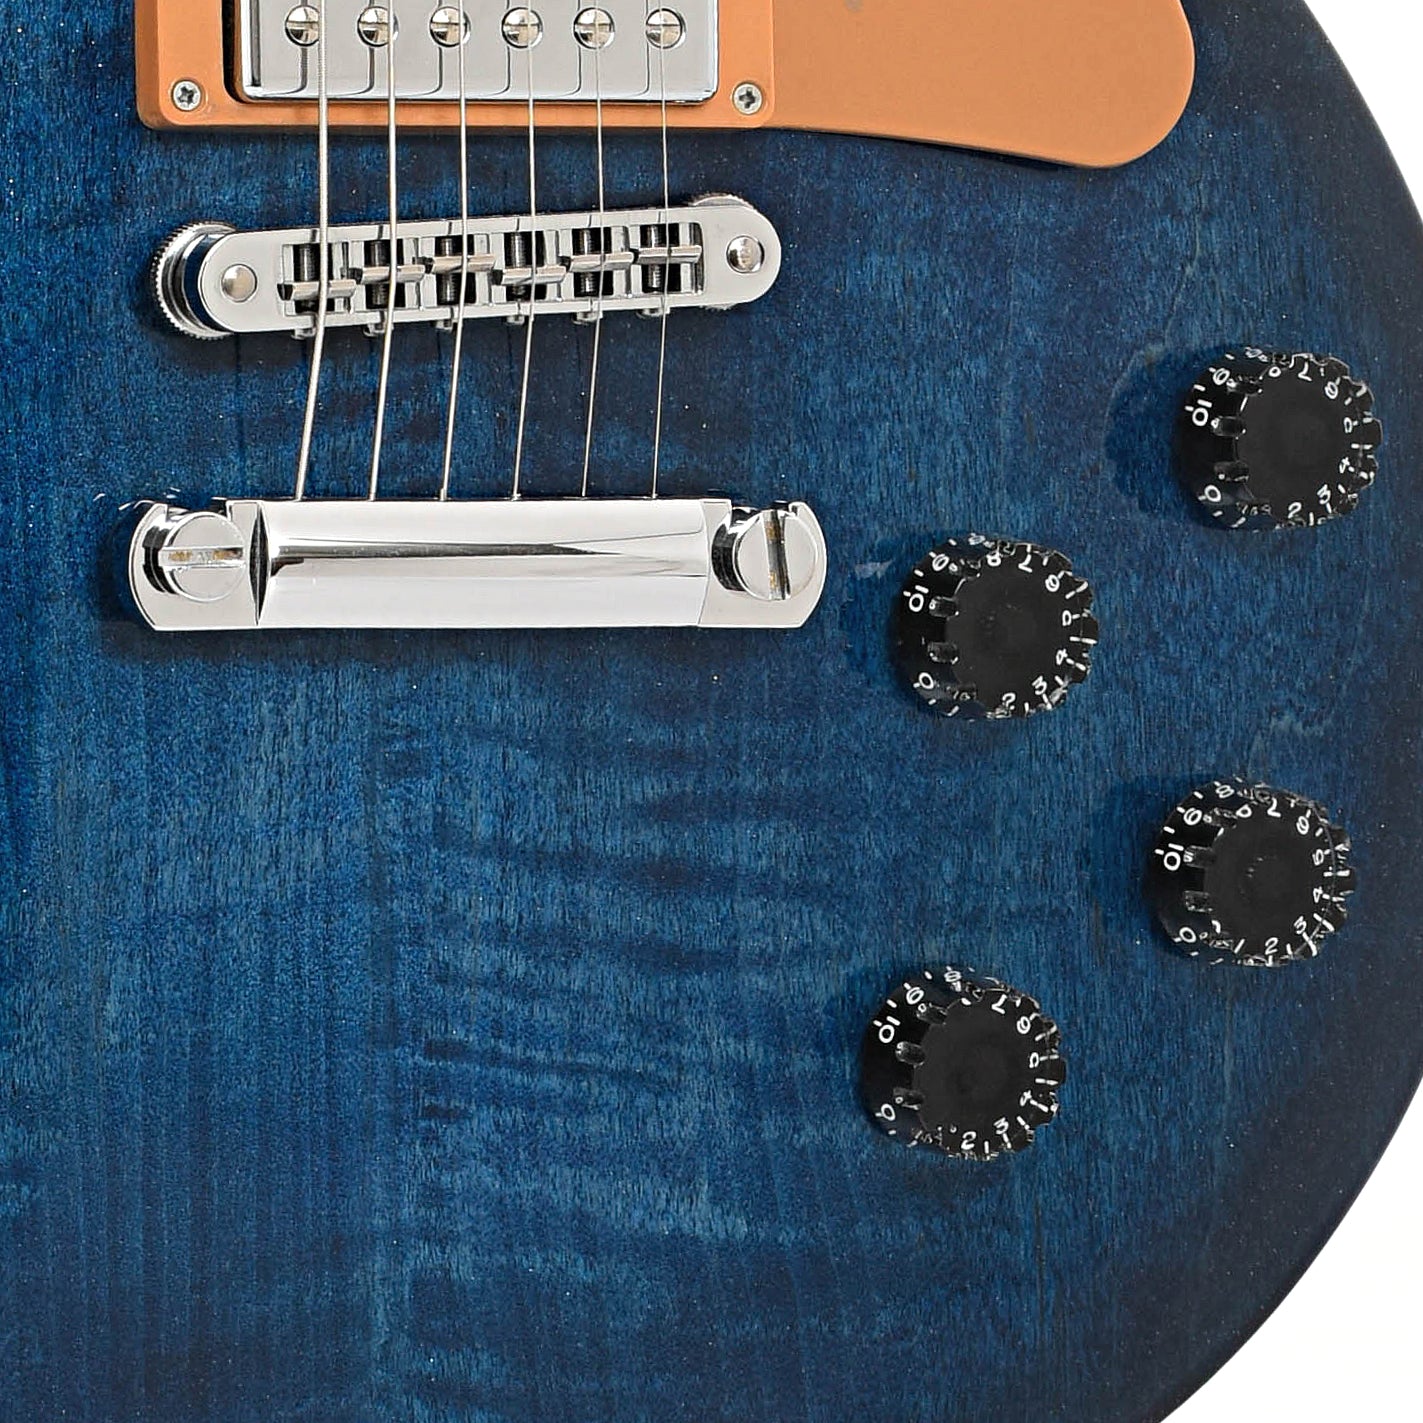 tailpiece, Bridge, and controls of Gibson Les Paul Studio